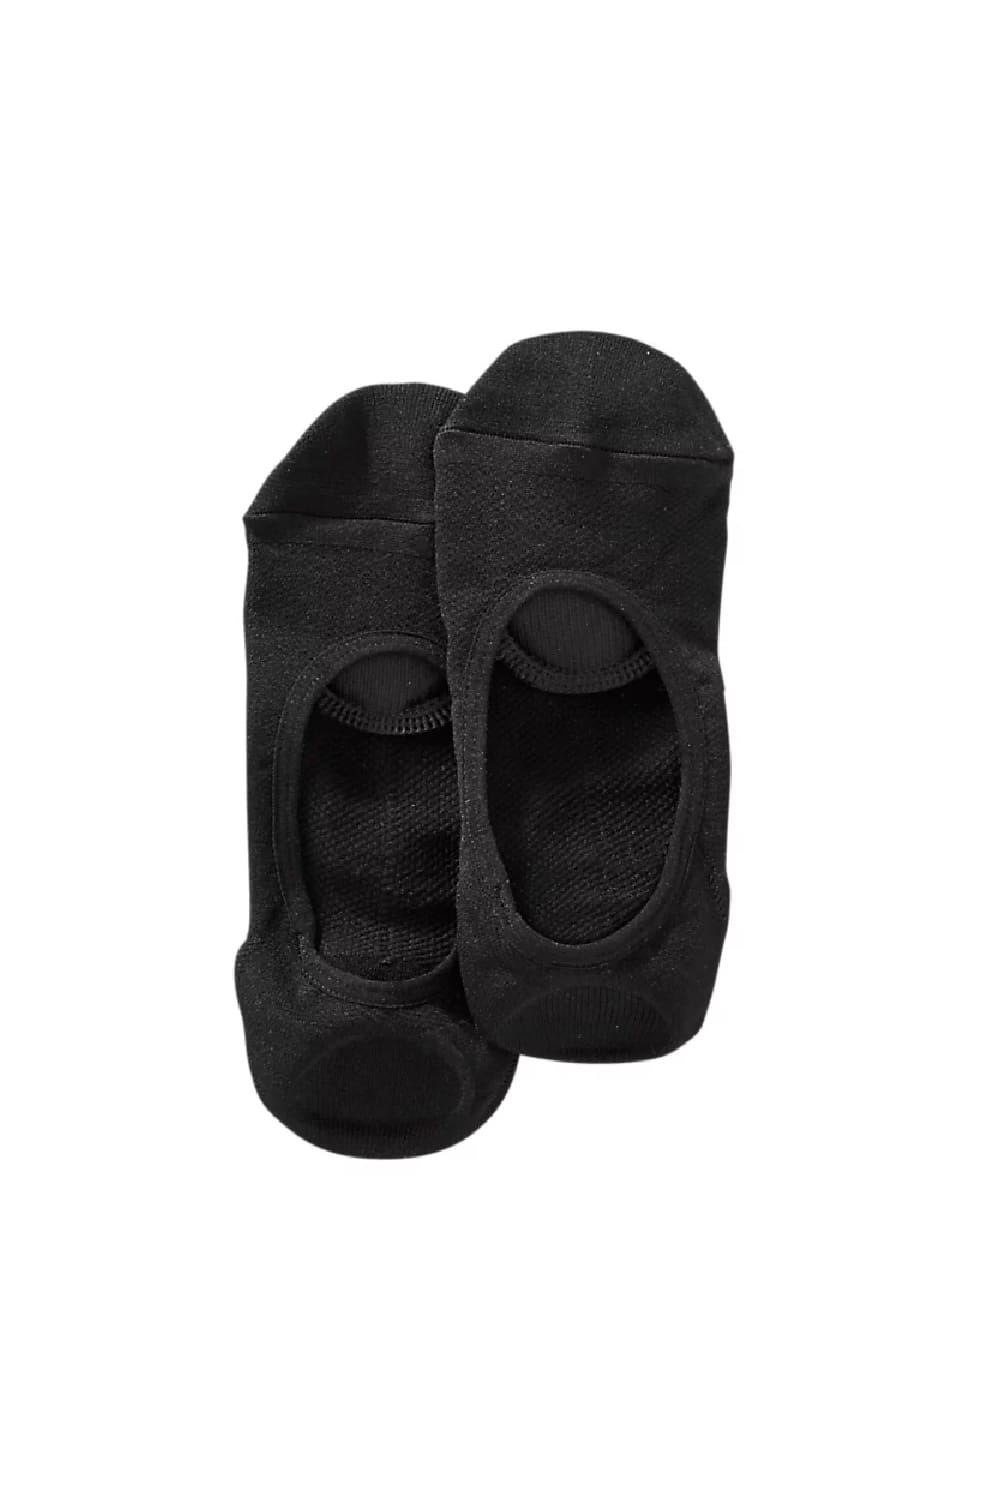 Timberland Womens/Ladies Ultra Low Liner Socks (2 Pairs) (Black)